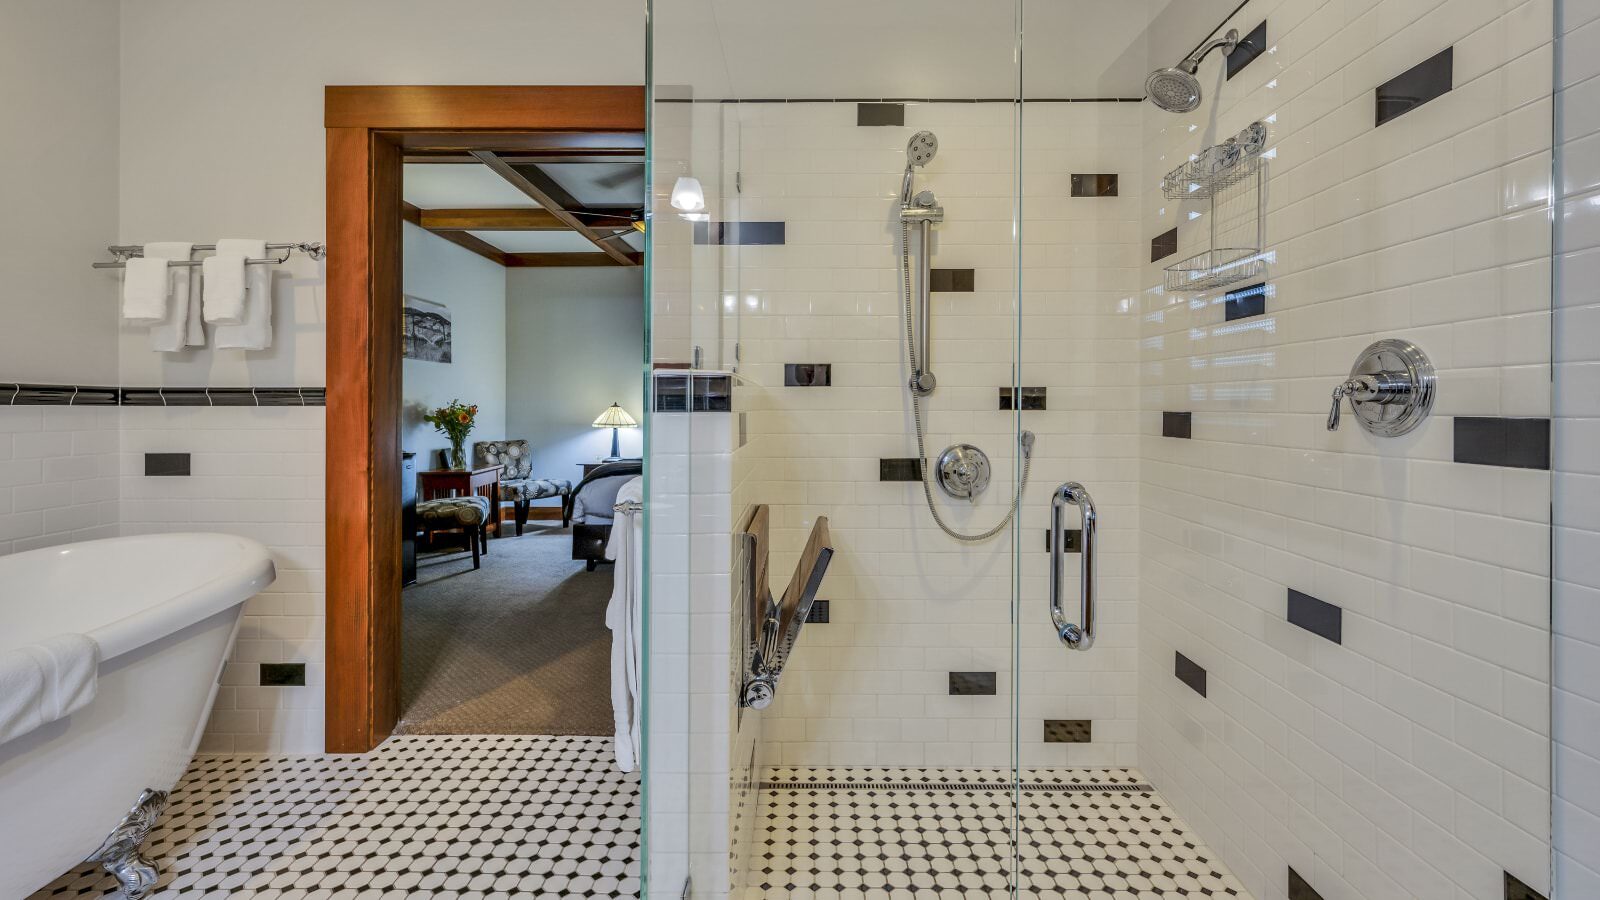 Bathroom with white walls, black and white tiled floor, black and white tiled shower, and white clawfoot tub